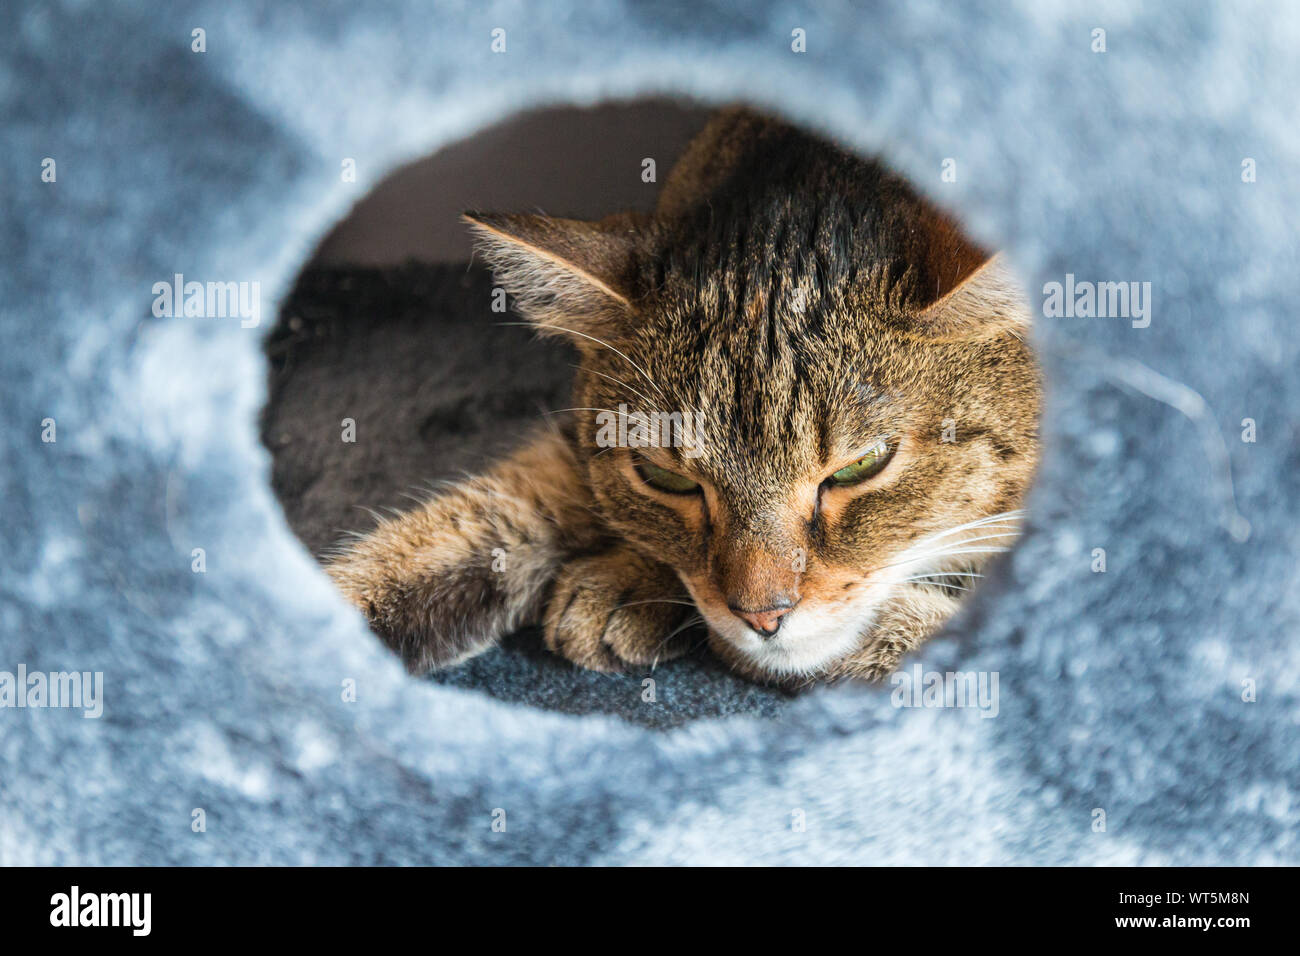 Barely awake cat inside cat house Stock Photo